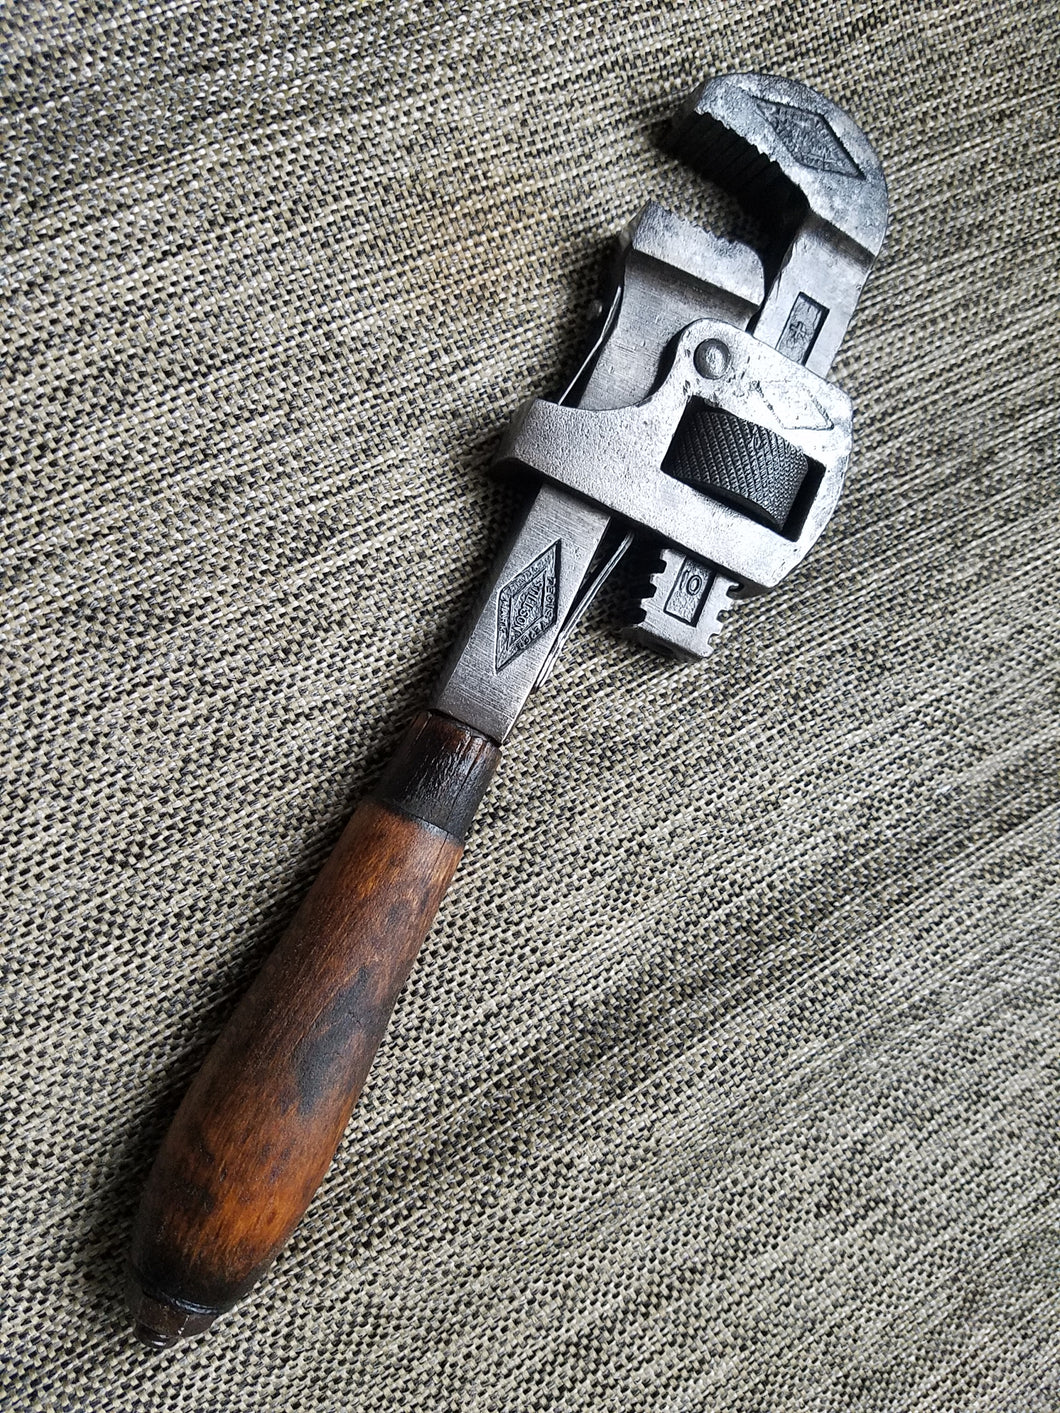 Vintage STILLSON WALWORTH #10 Pipe Wrench Wood Handle